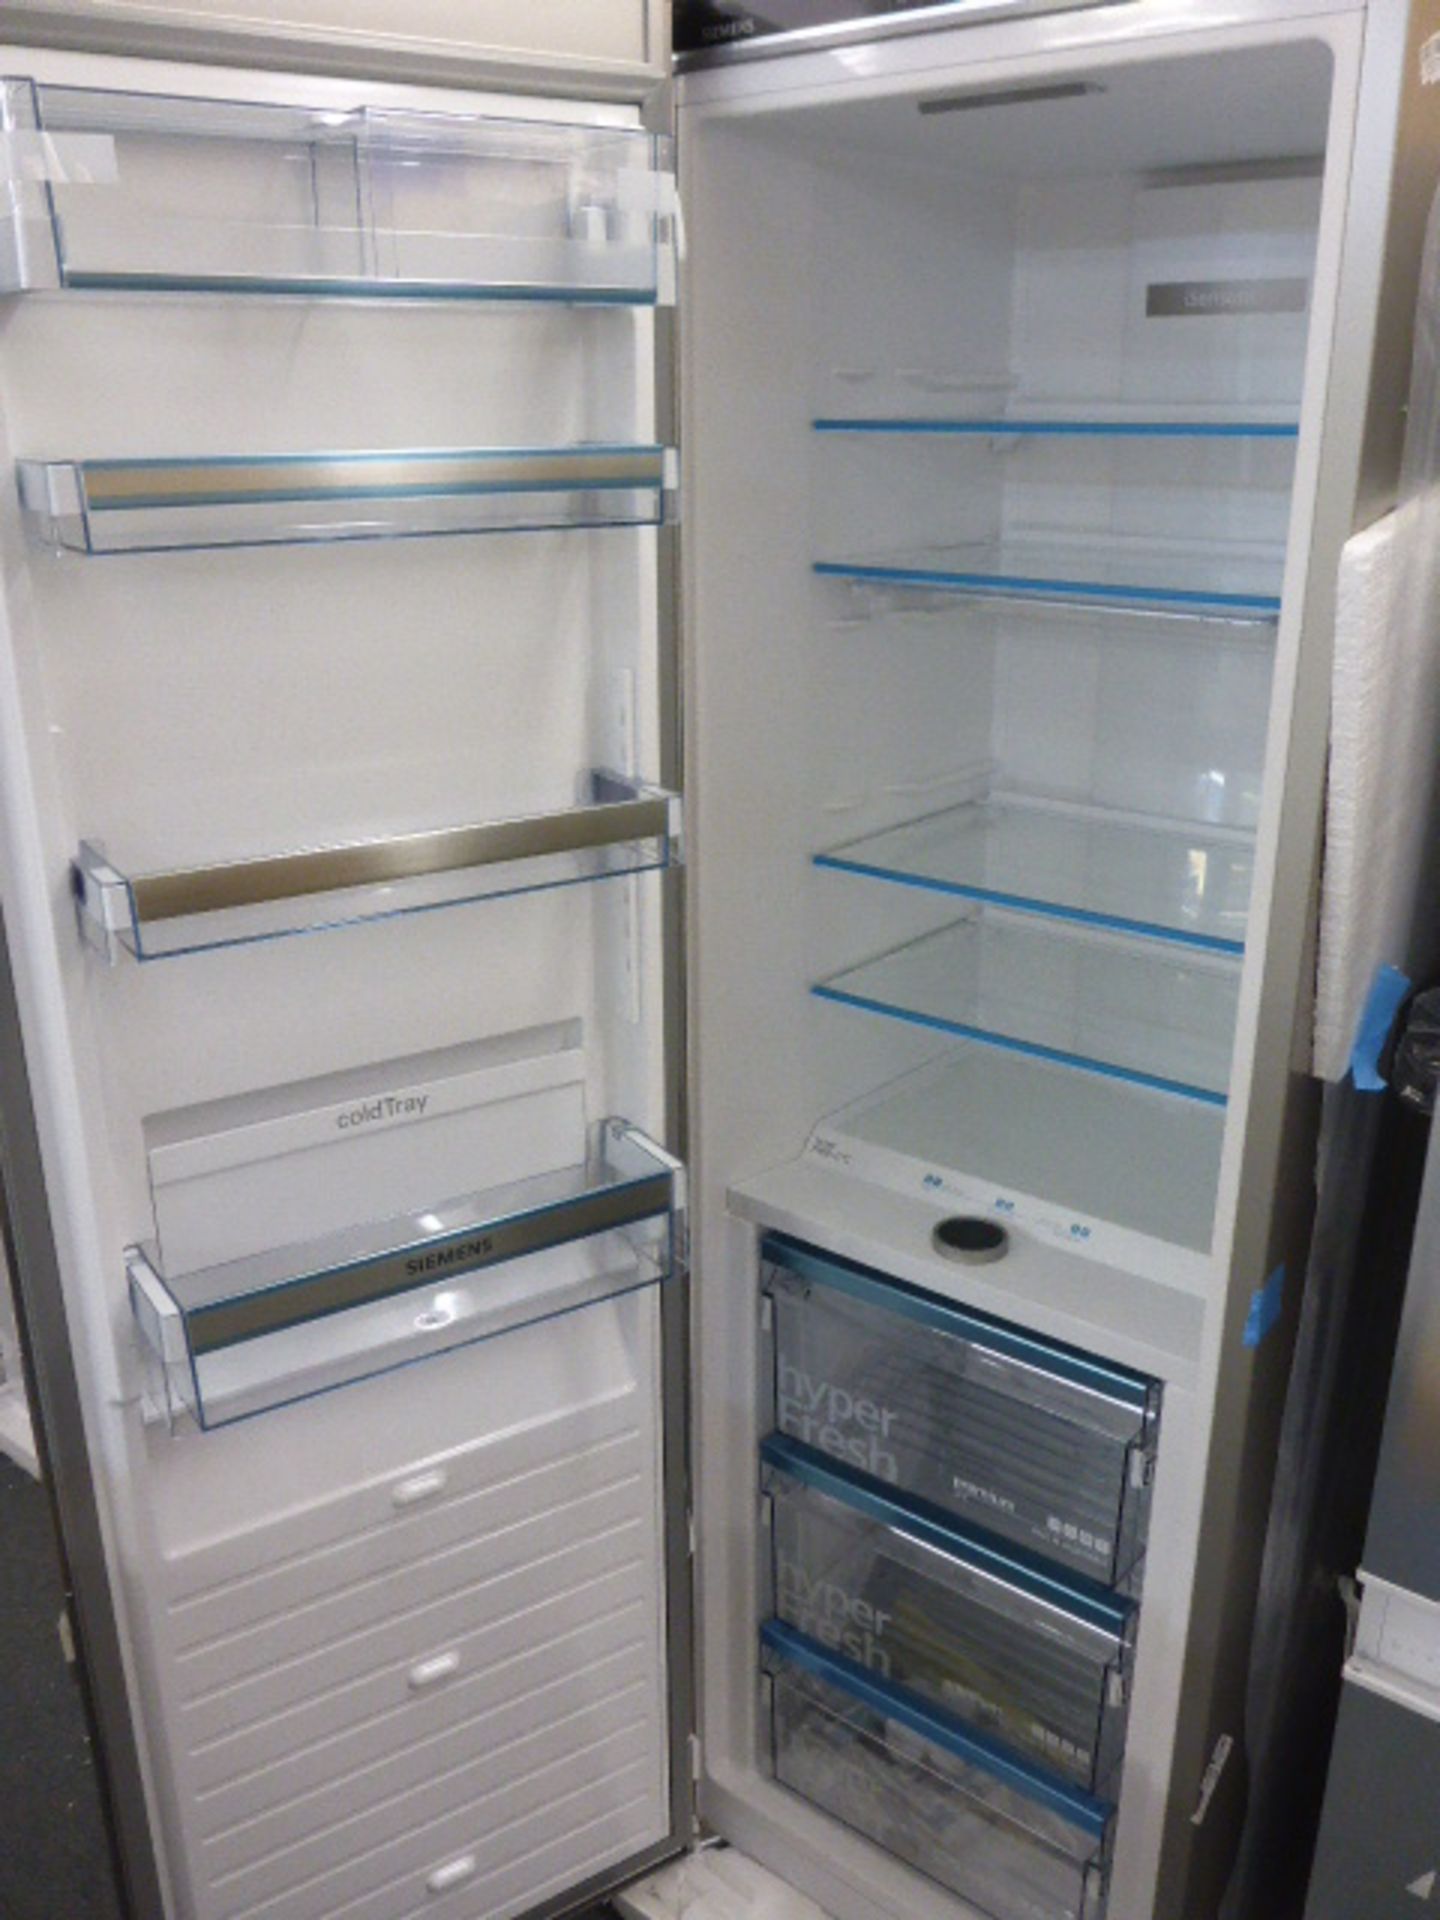 KS36FPI3P-B Siemens Free-standing refrigerator - Image 2 of 2